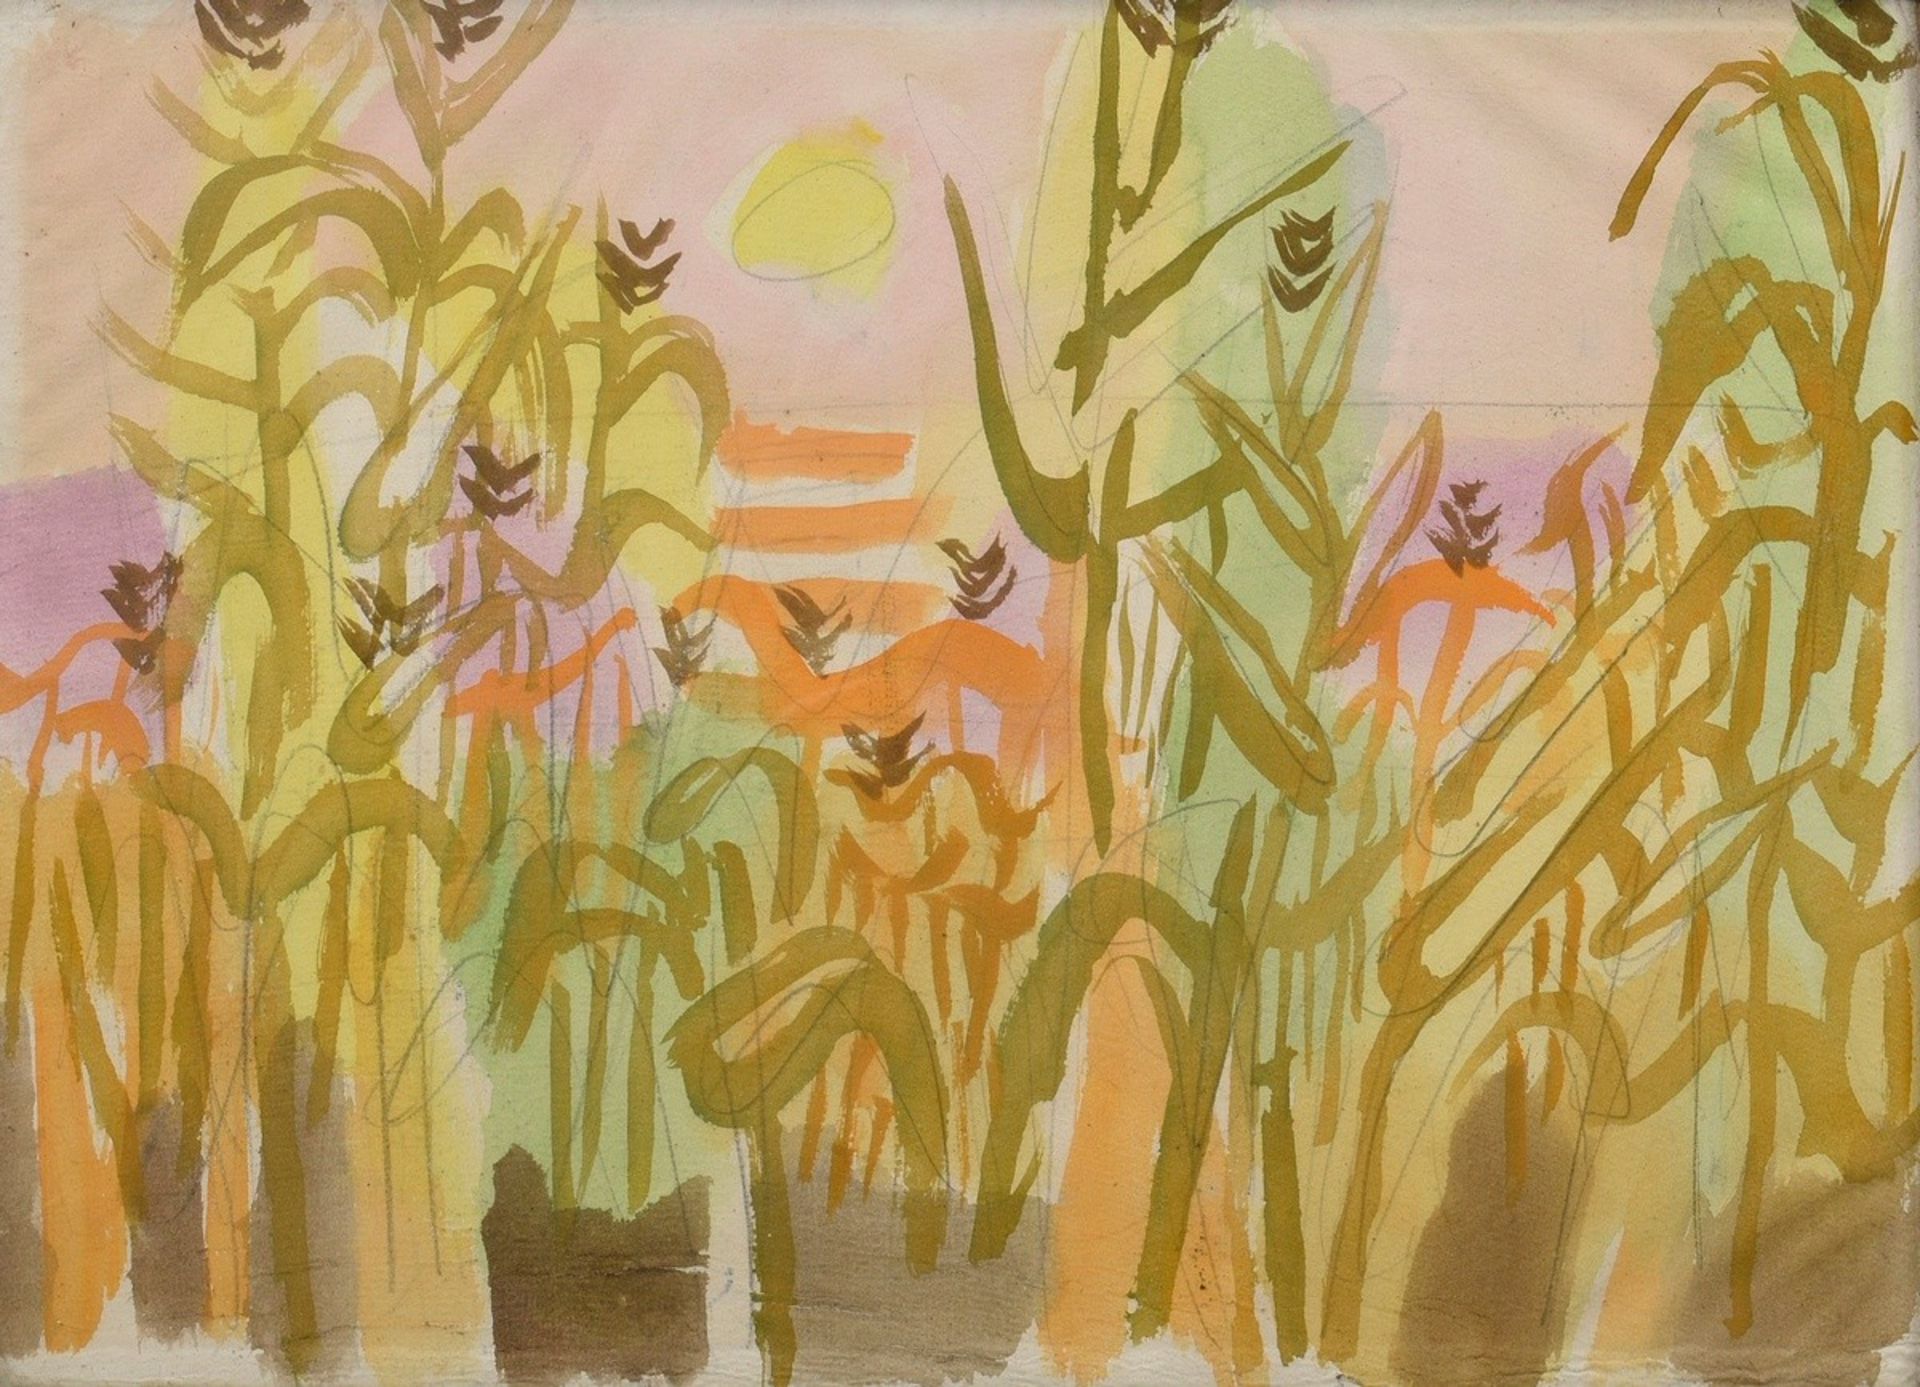 Bargheer, Eduard (1901-1979) "Cornfield in the sunlight", watercolour/pencil, verso "City sketch"/i